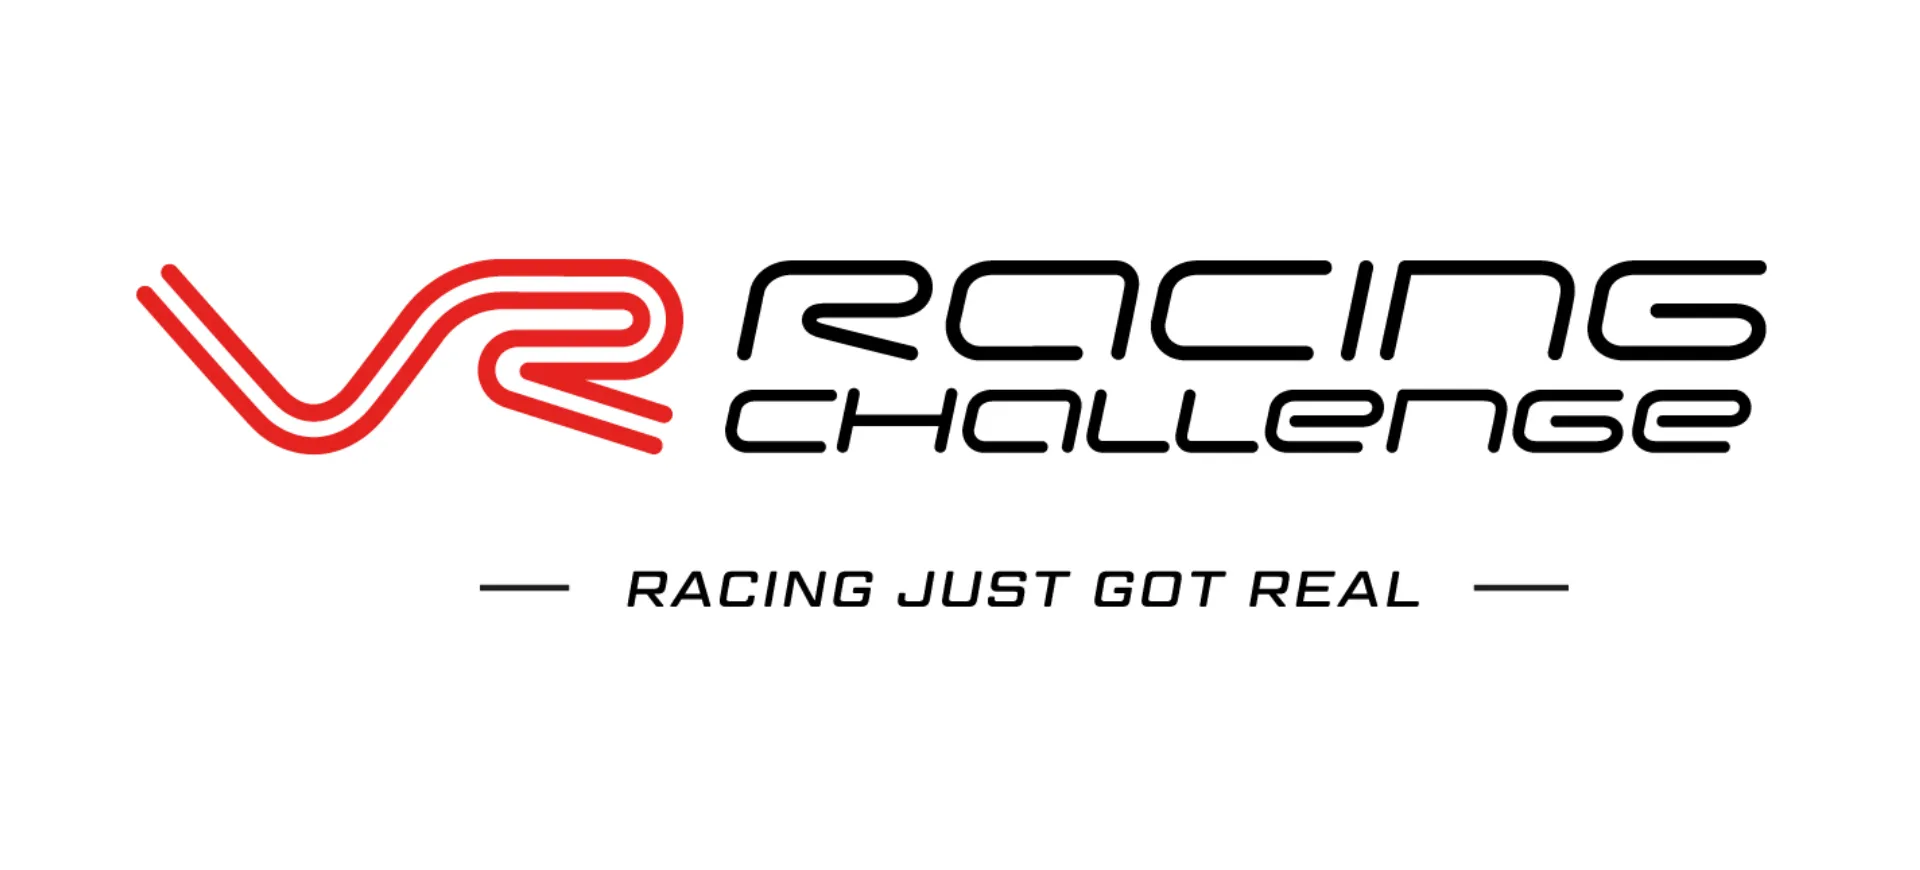 VR Racing Logos